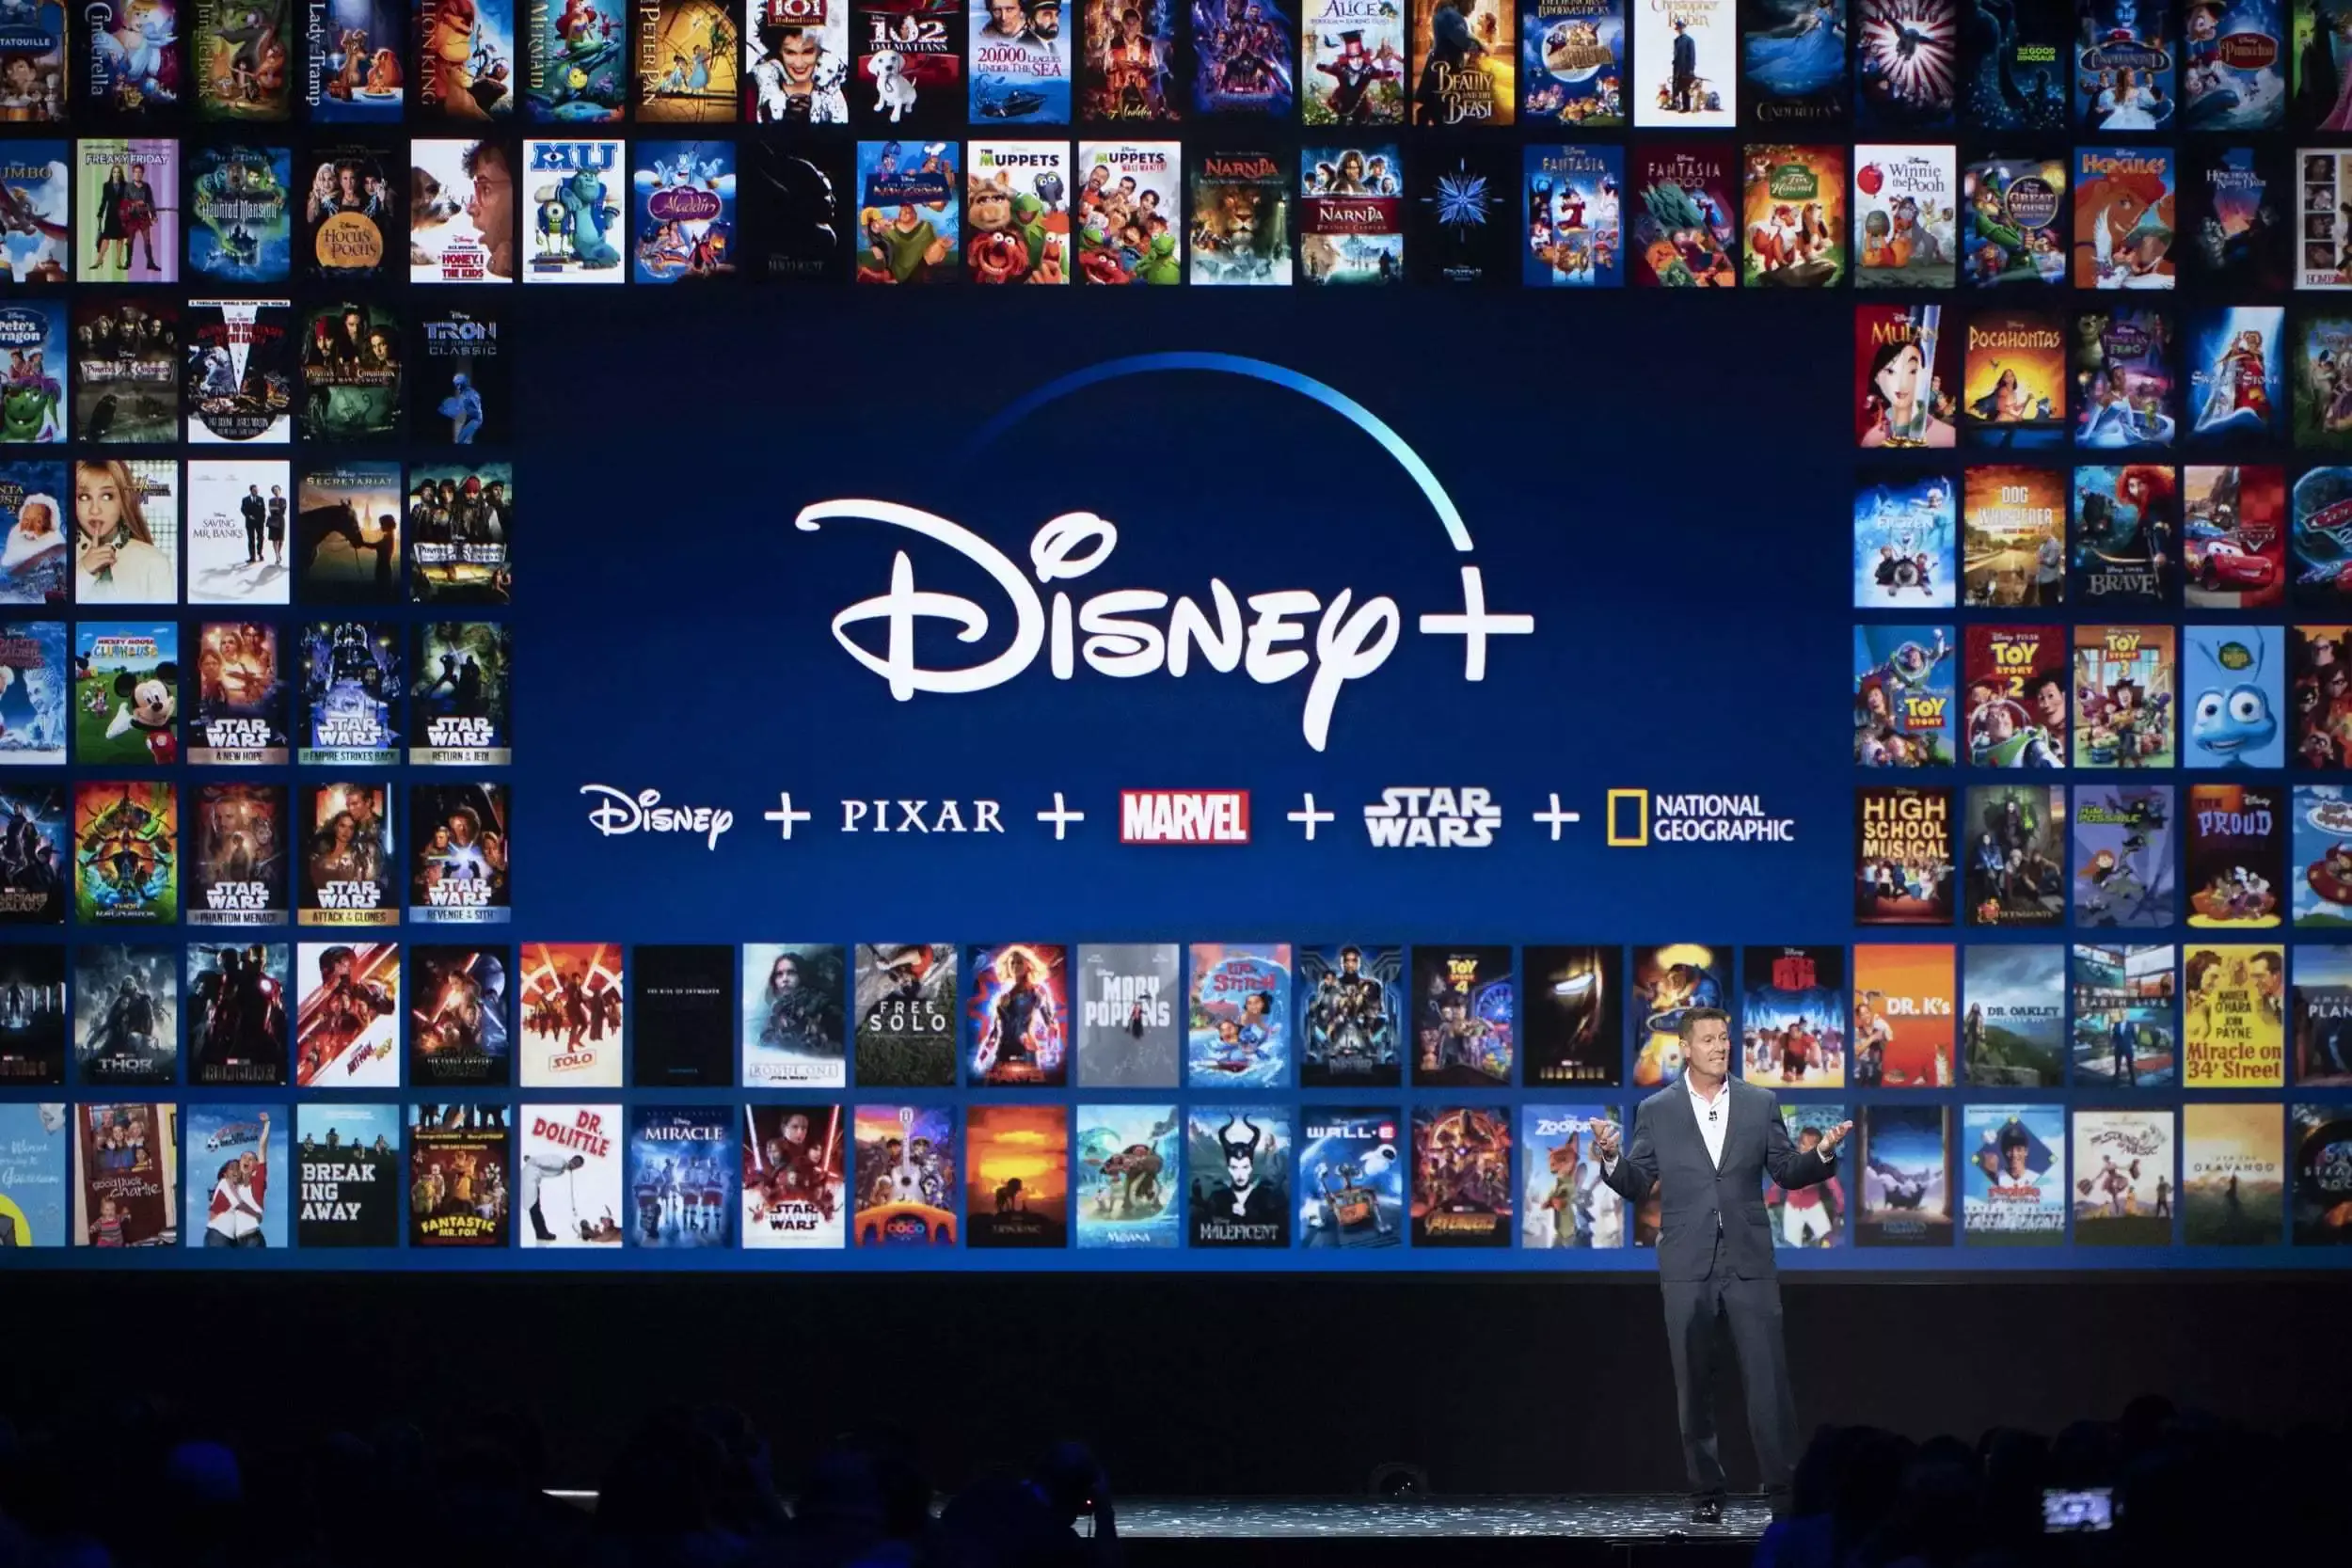 The Disney+ launch presentation.